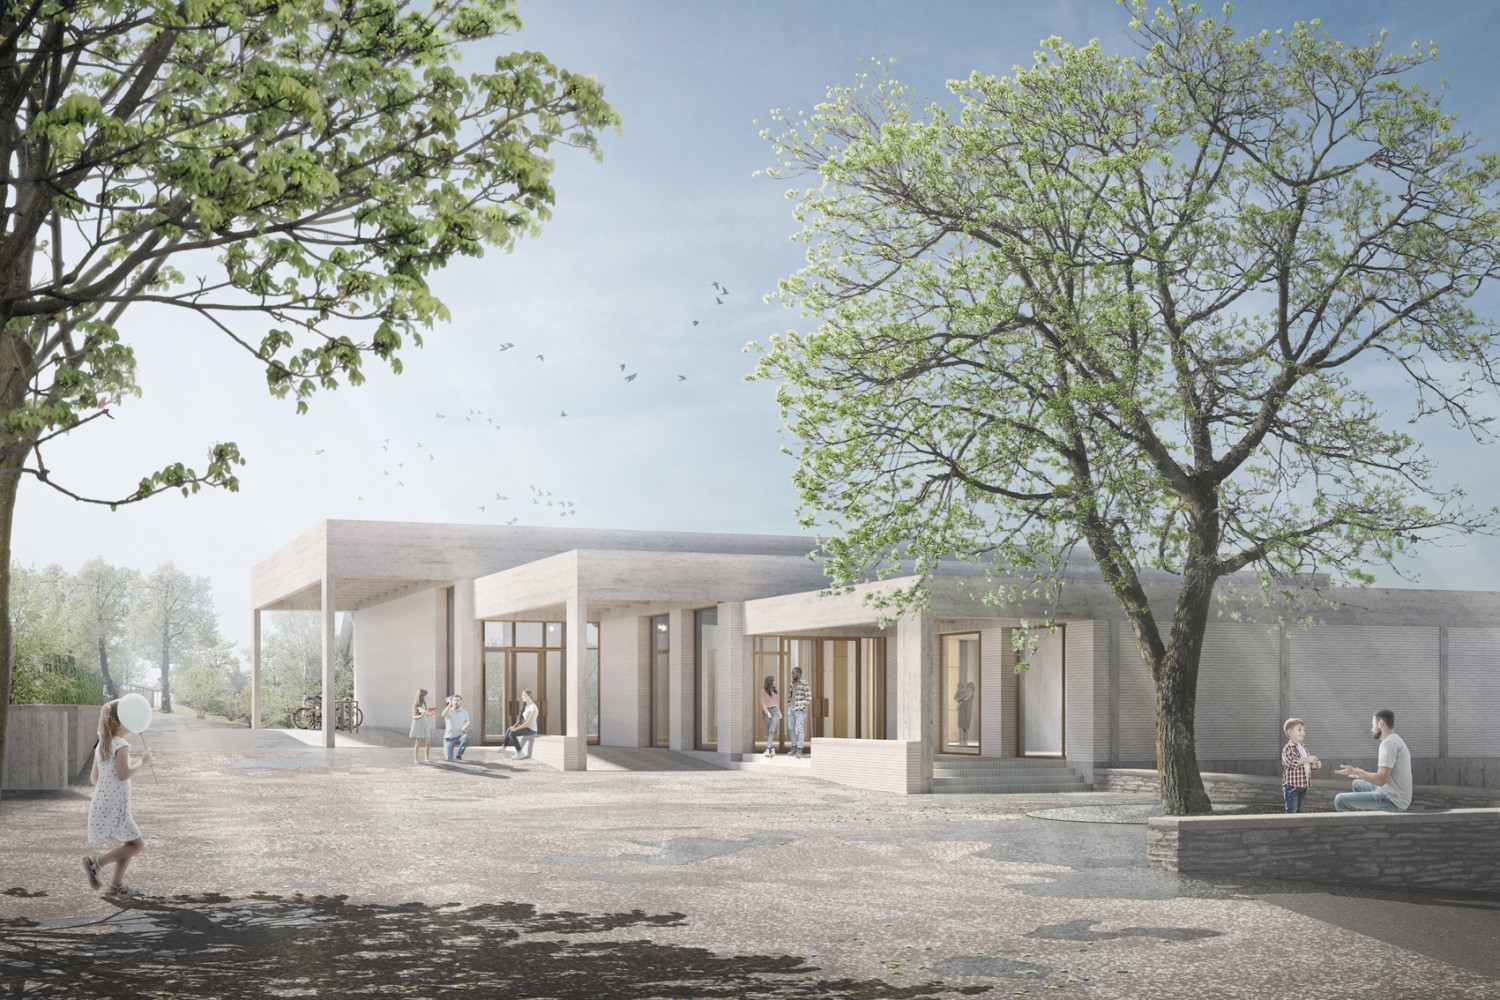 HUMMBURKART ARCHITEKTEN: Neubau Pfarreisaal Muri / Inspiration Matterhaus